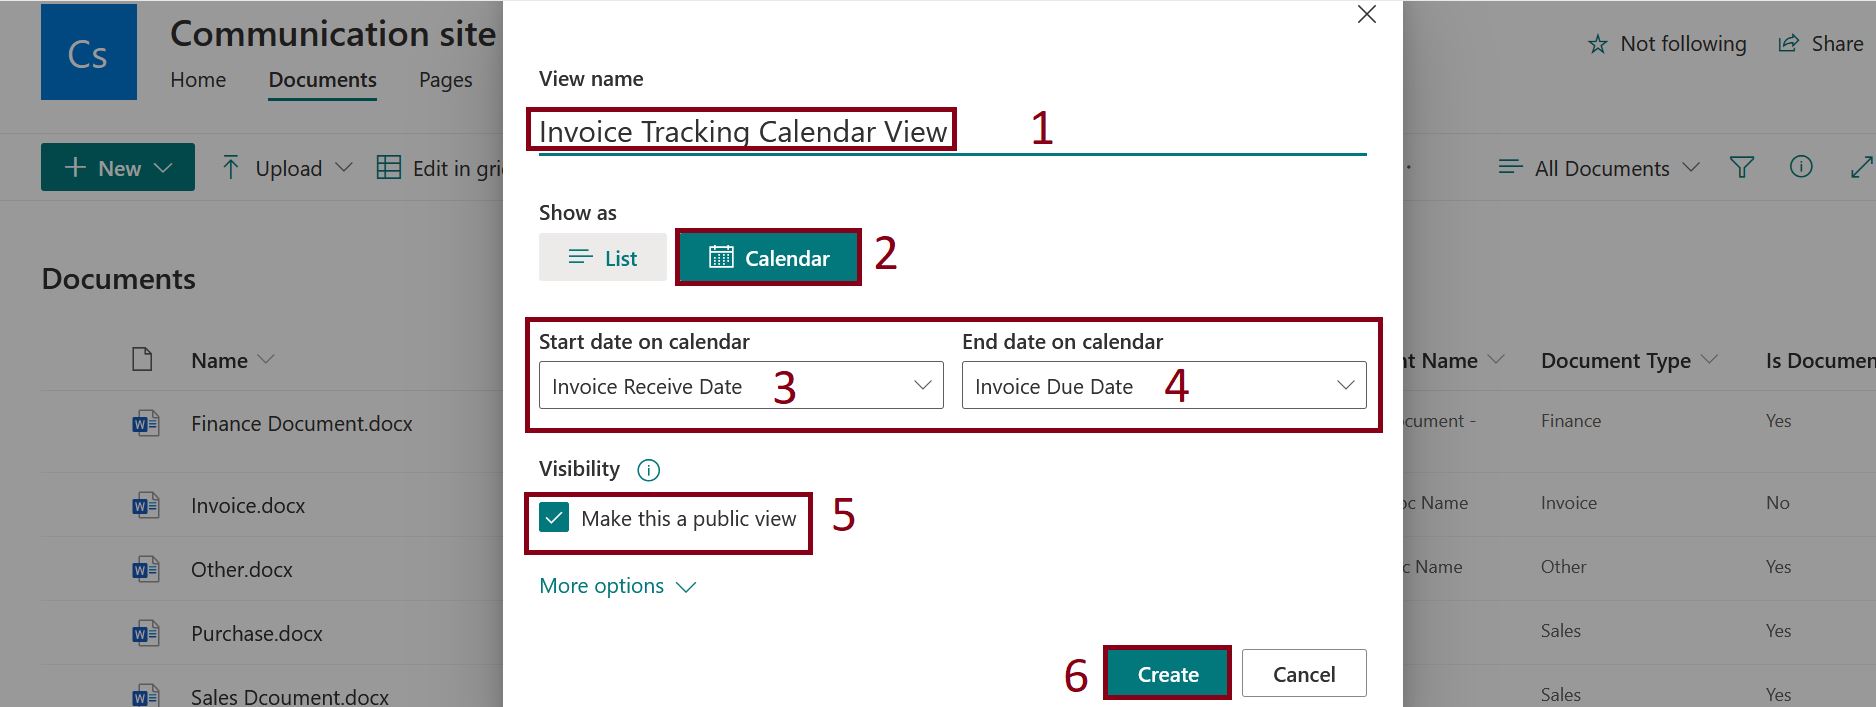 calendar view in SharePoint online - create calendar view in modern SharePoint Online document library